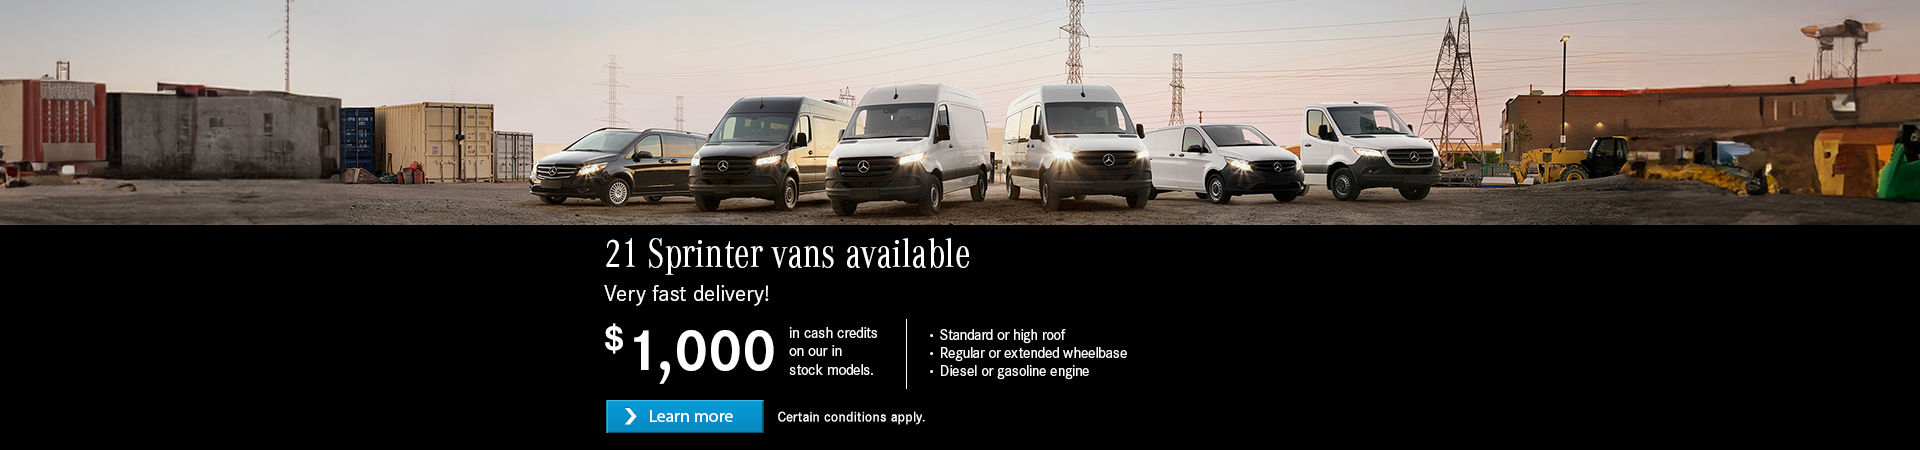 21 Sprinter Vans Available